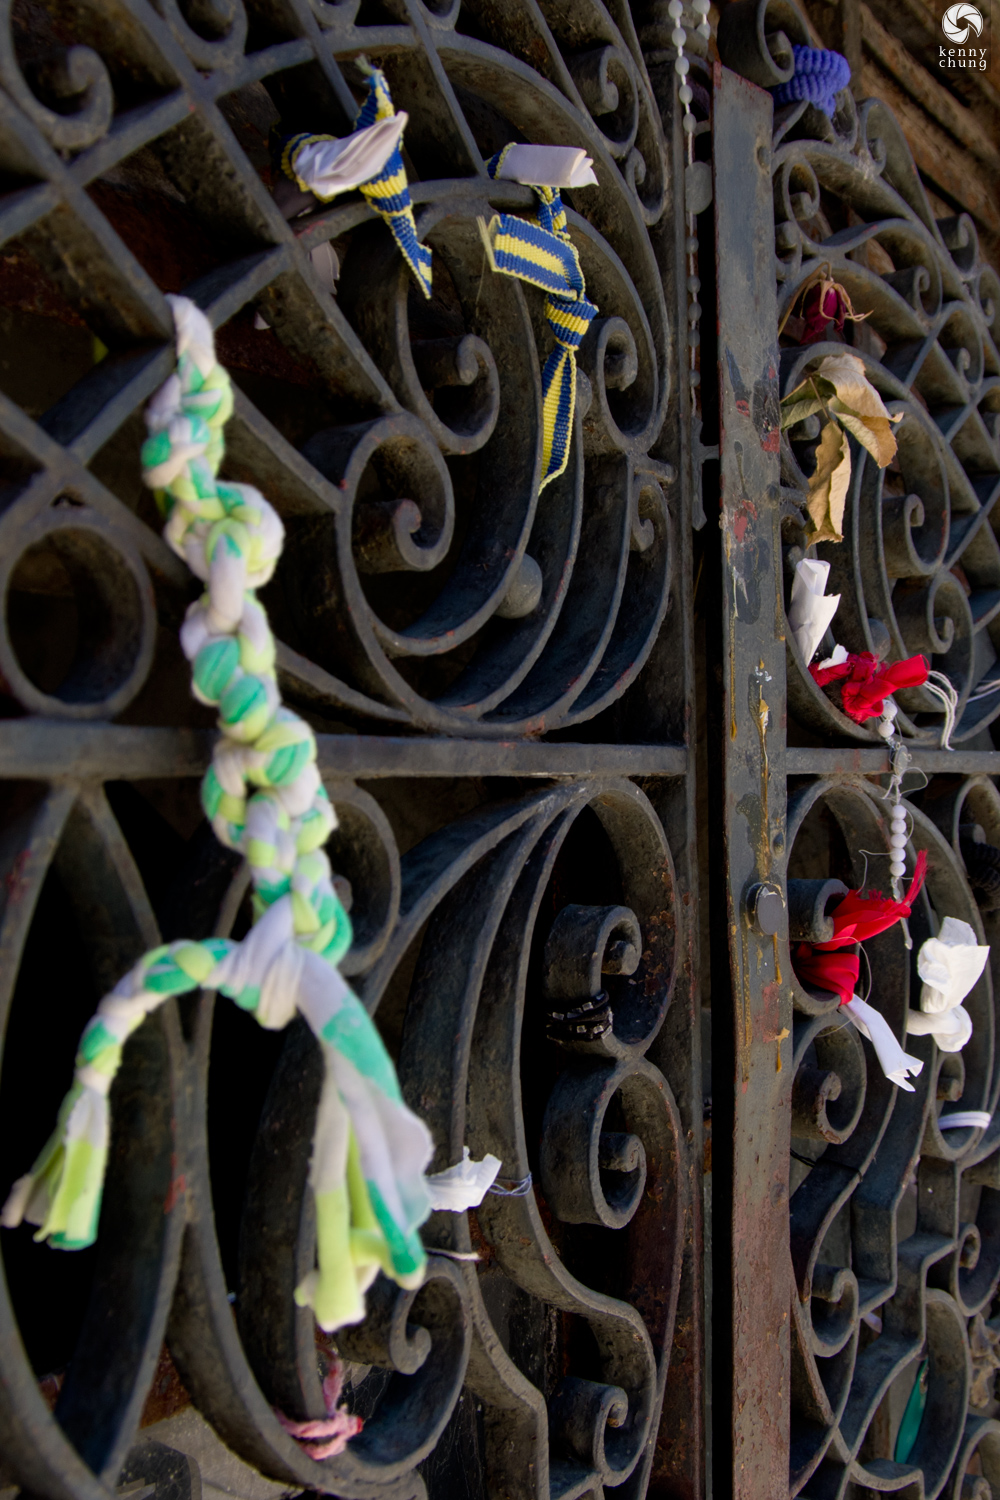 Landyards and ribbons attached to a mausoleum gate at Cementerio de La Recoleta